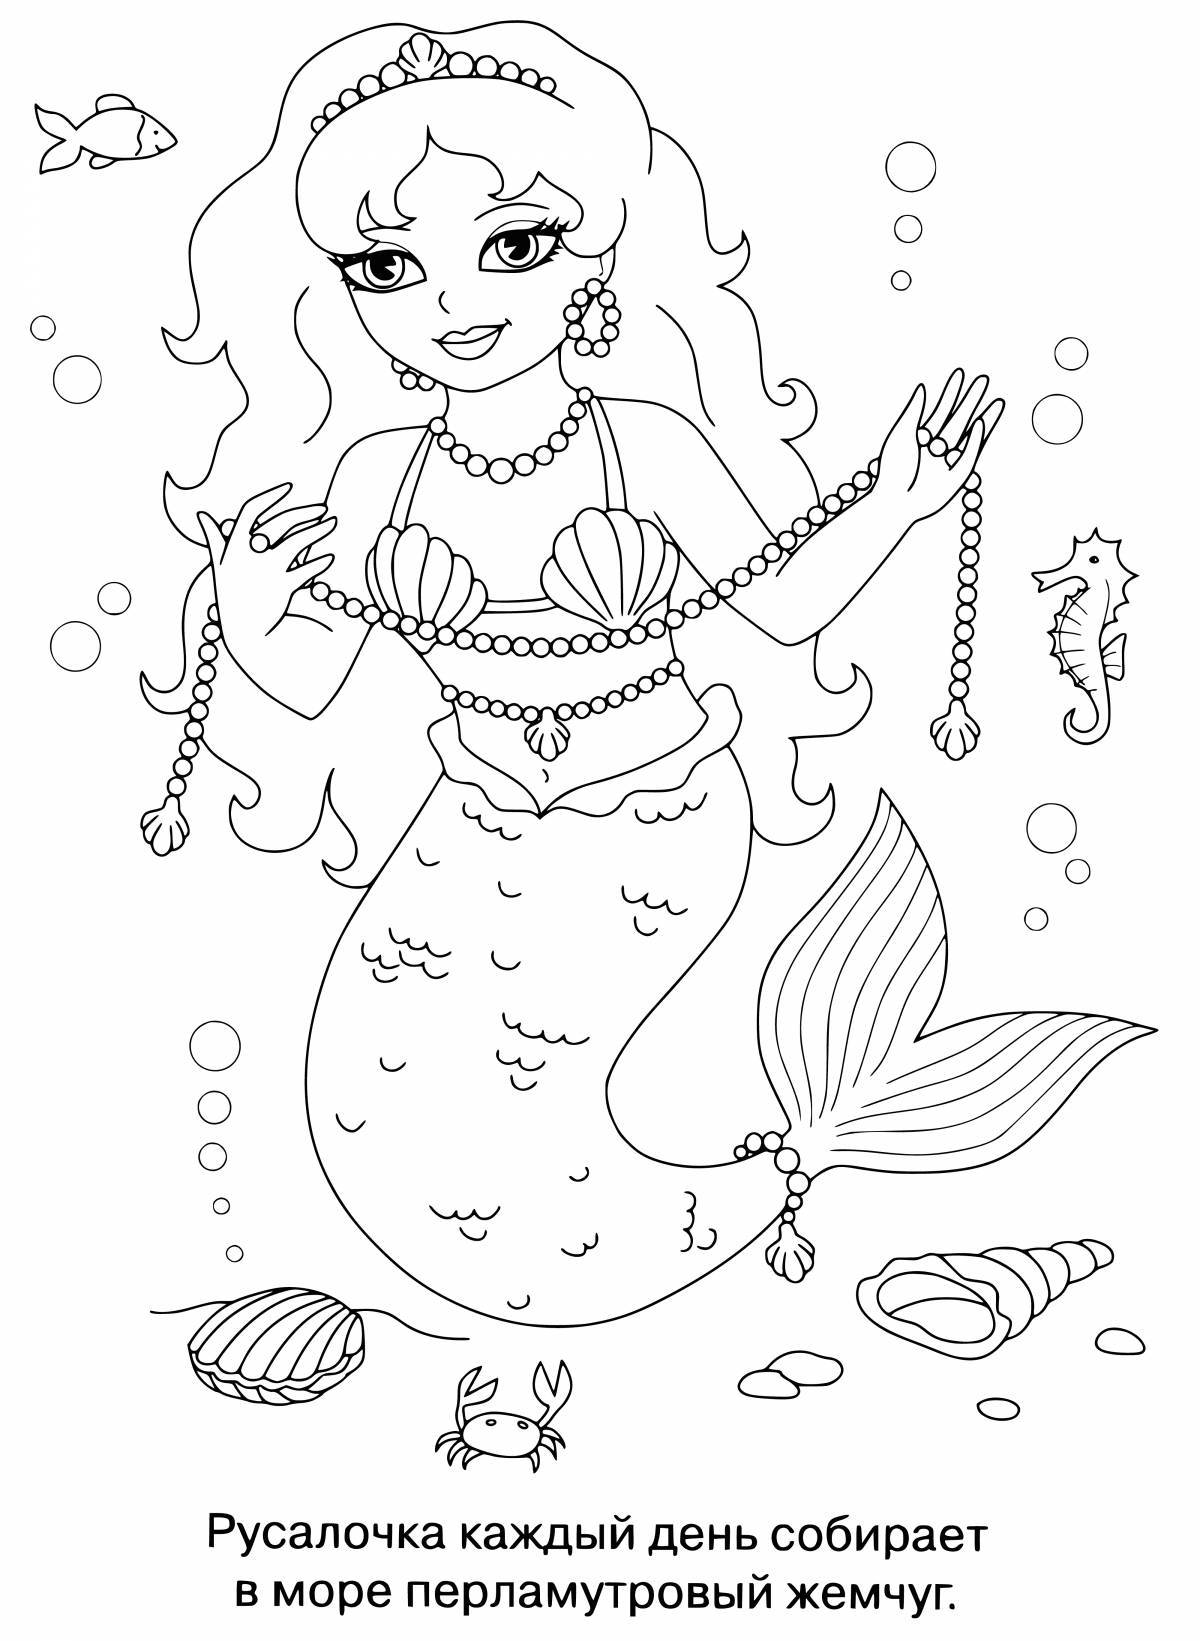 Adorable mermaid coloring book for kids